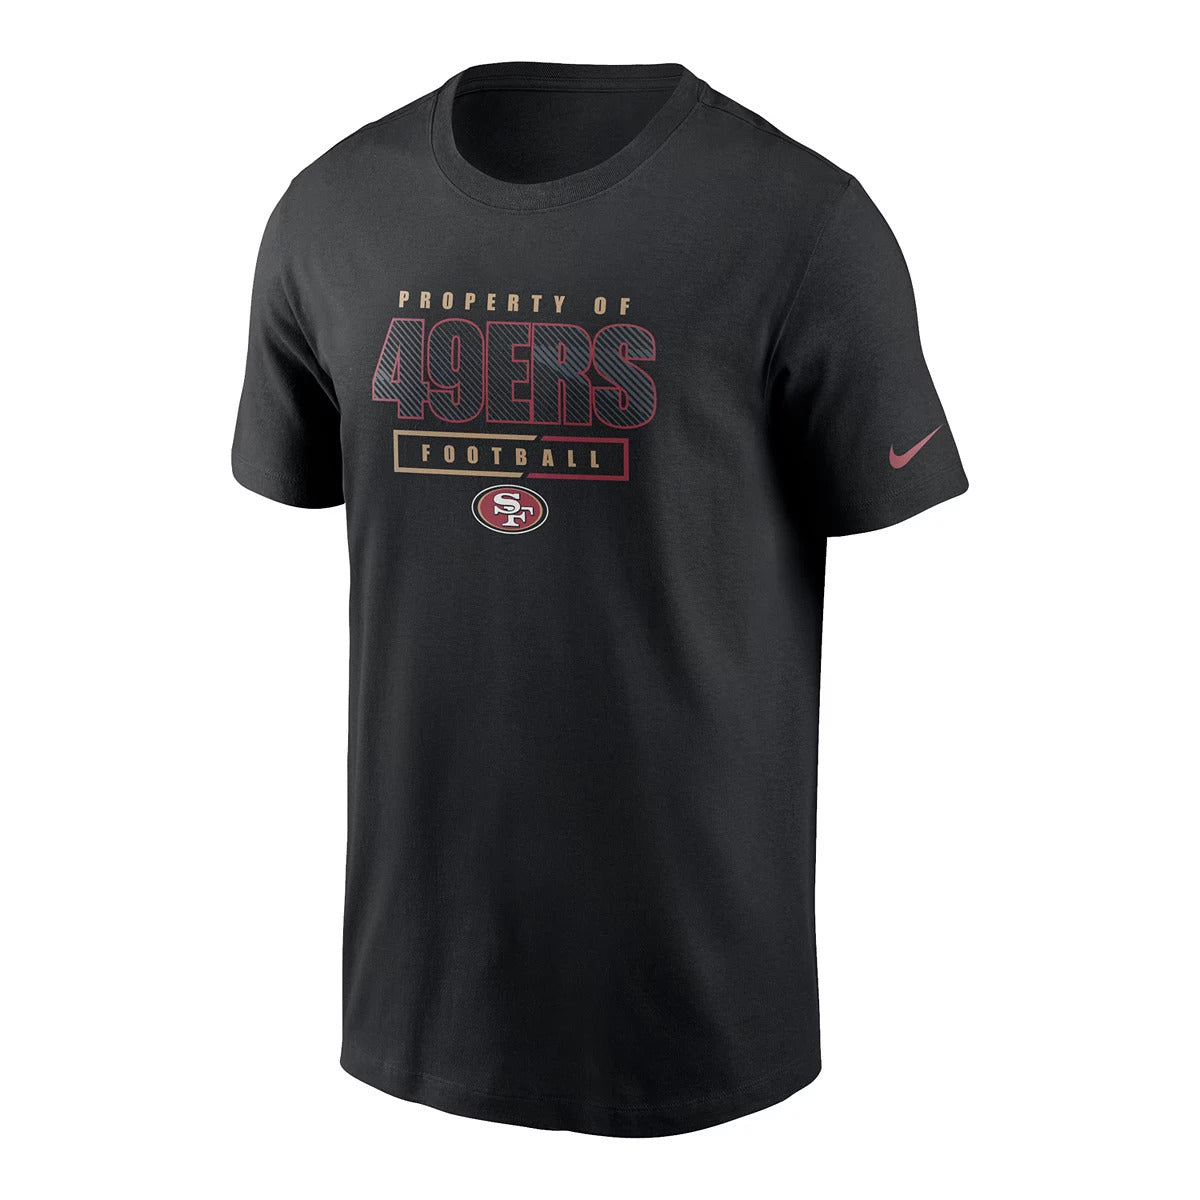 Men's Nike San Francisco 49ers Property Of Tee- Black